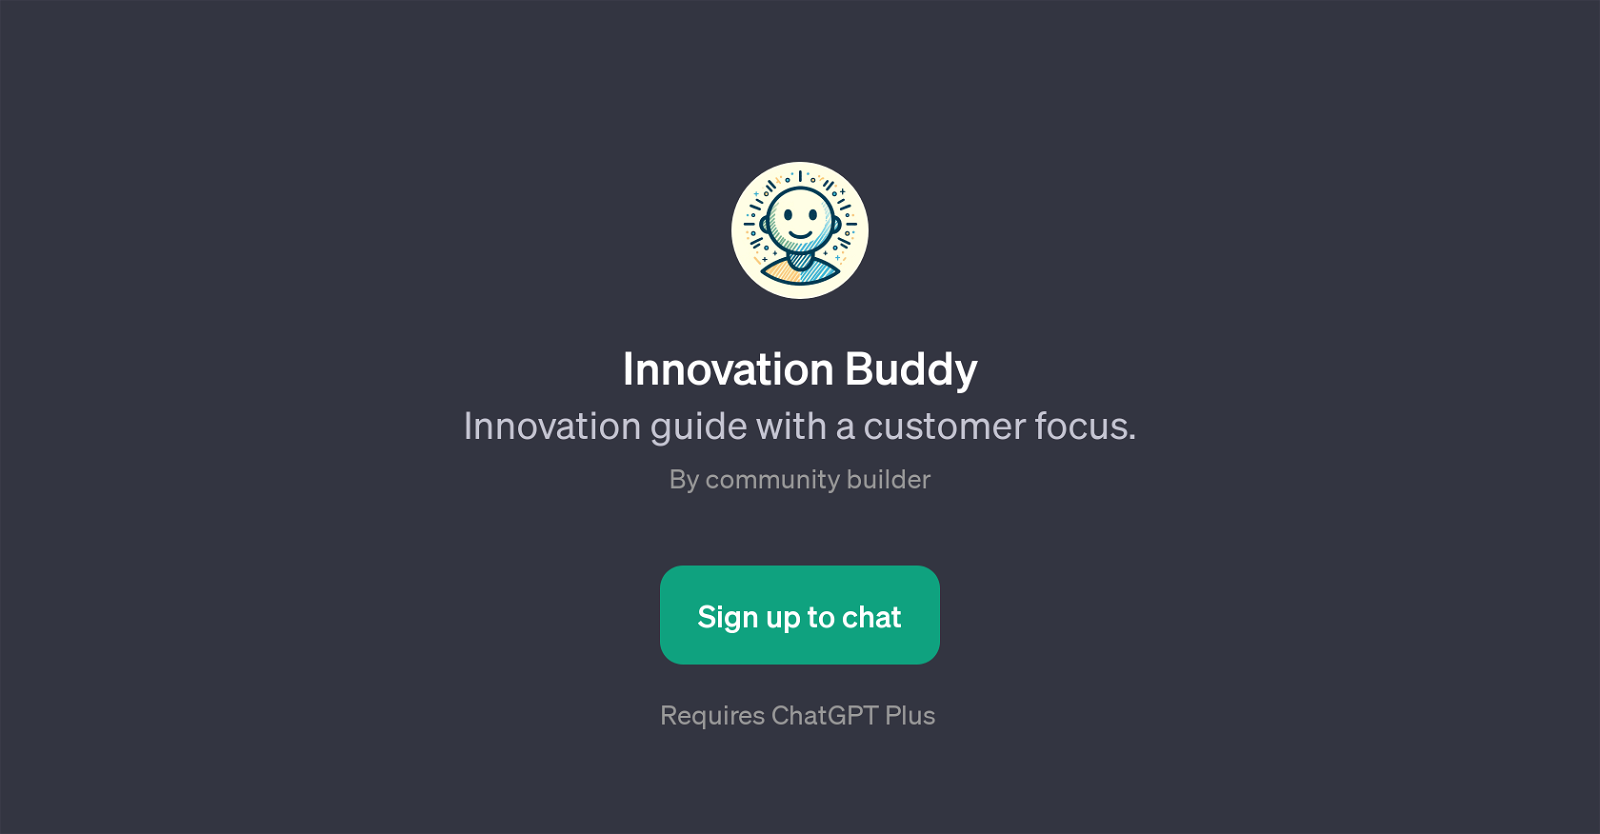 Innovation Buddy website